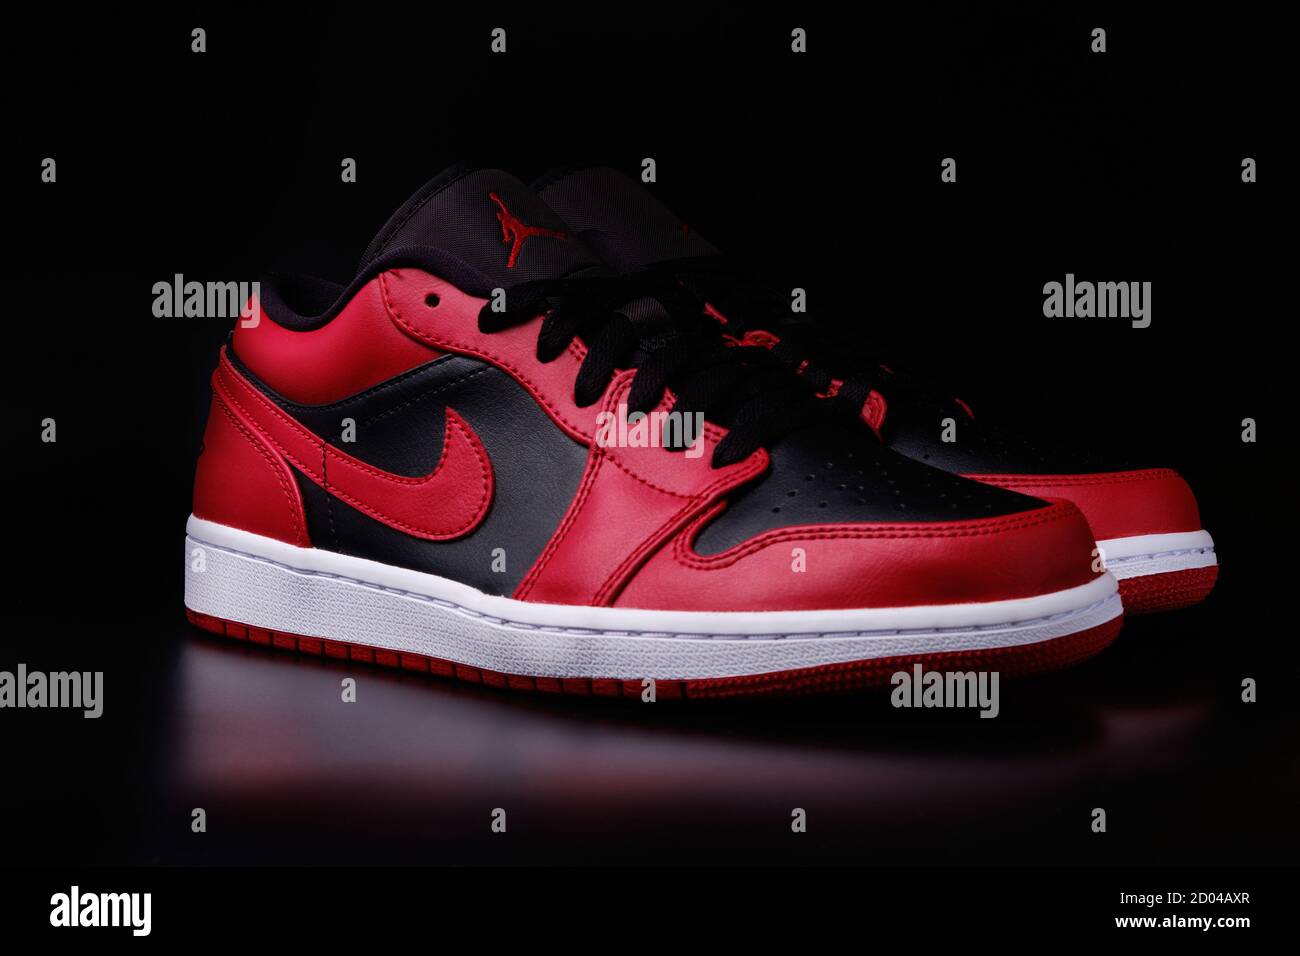 Nike Air Jordan 1 Retro Low Reverse Bred colorway sneakers on black  background illustrative editorial Stock Photo - Alamy